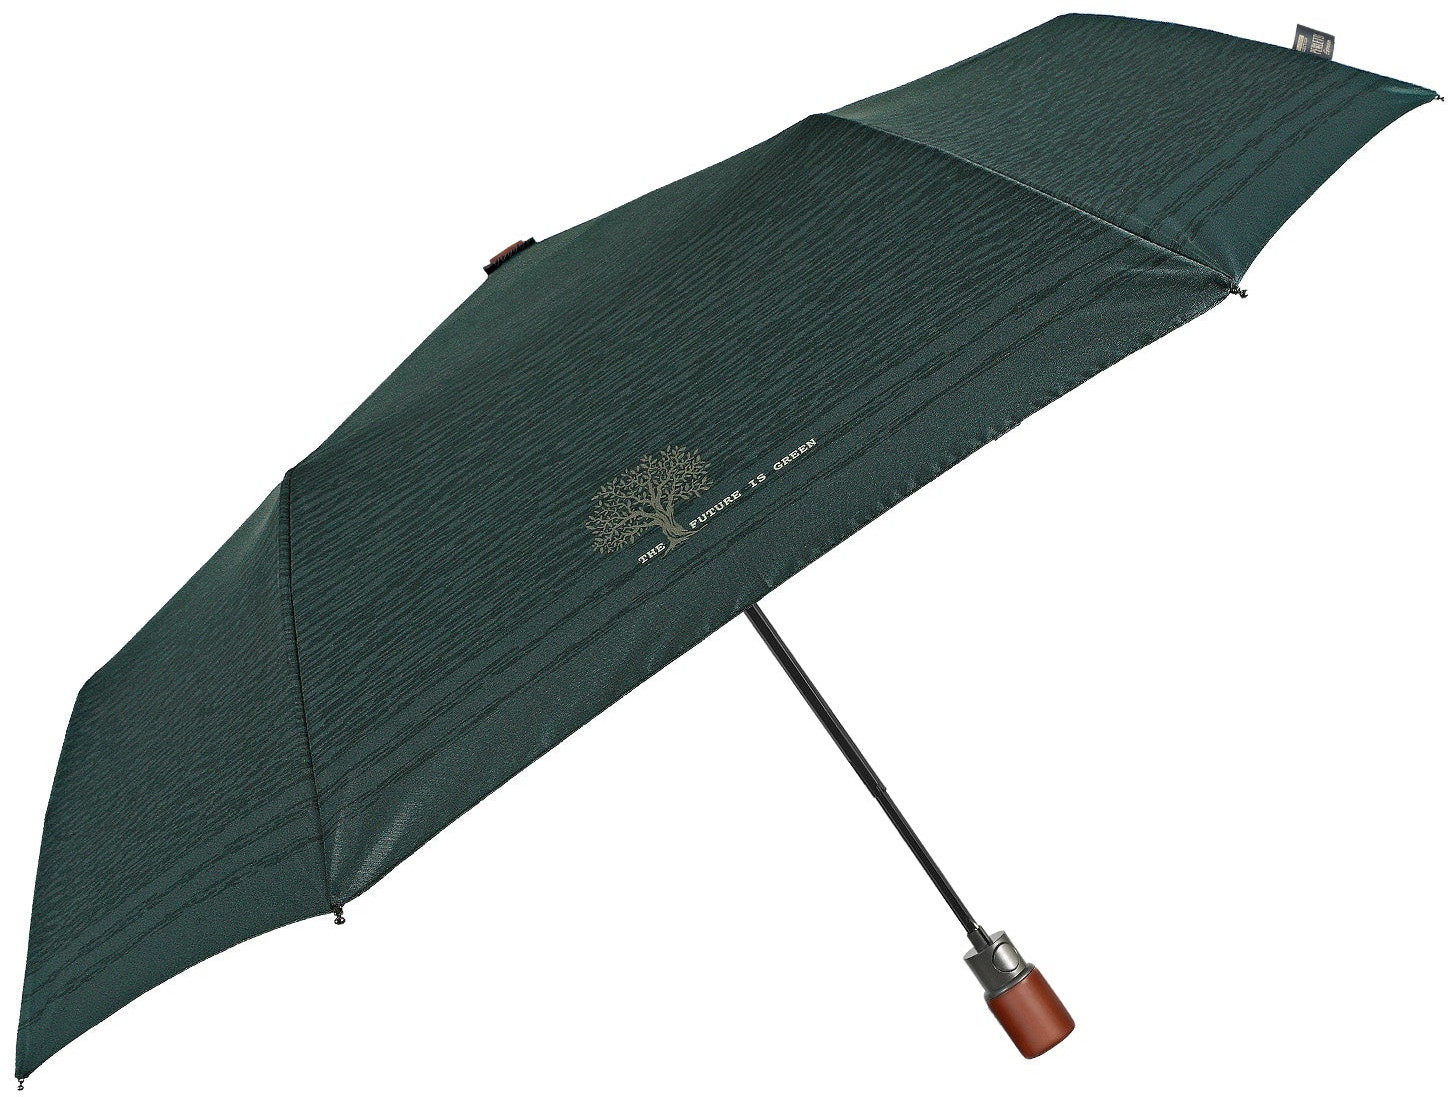 Perletti Skládací deštník 19154.2